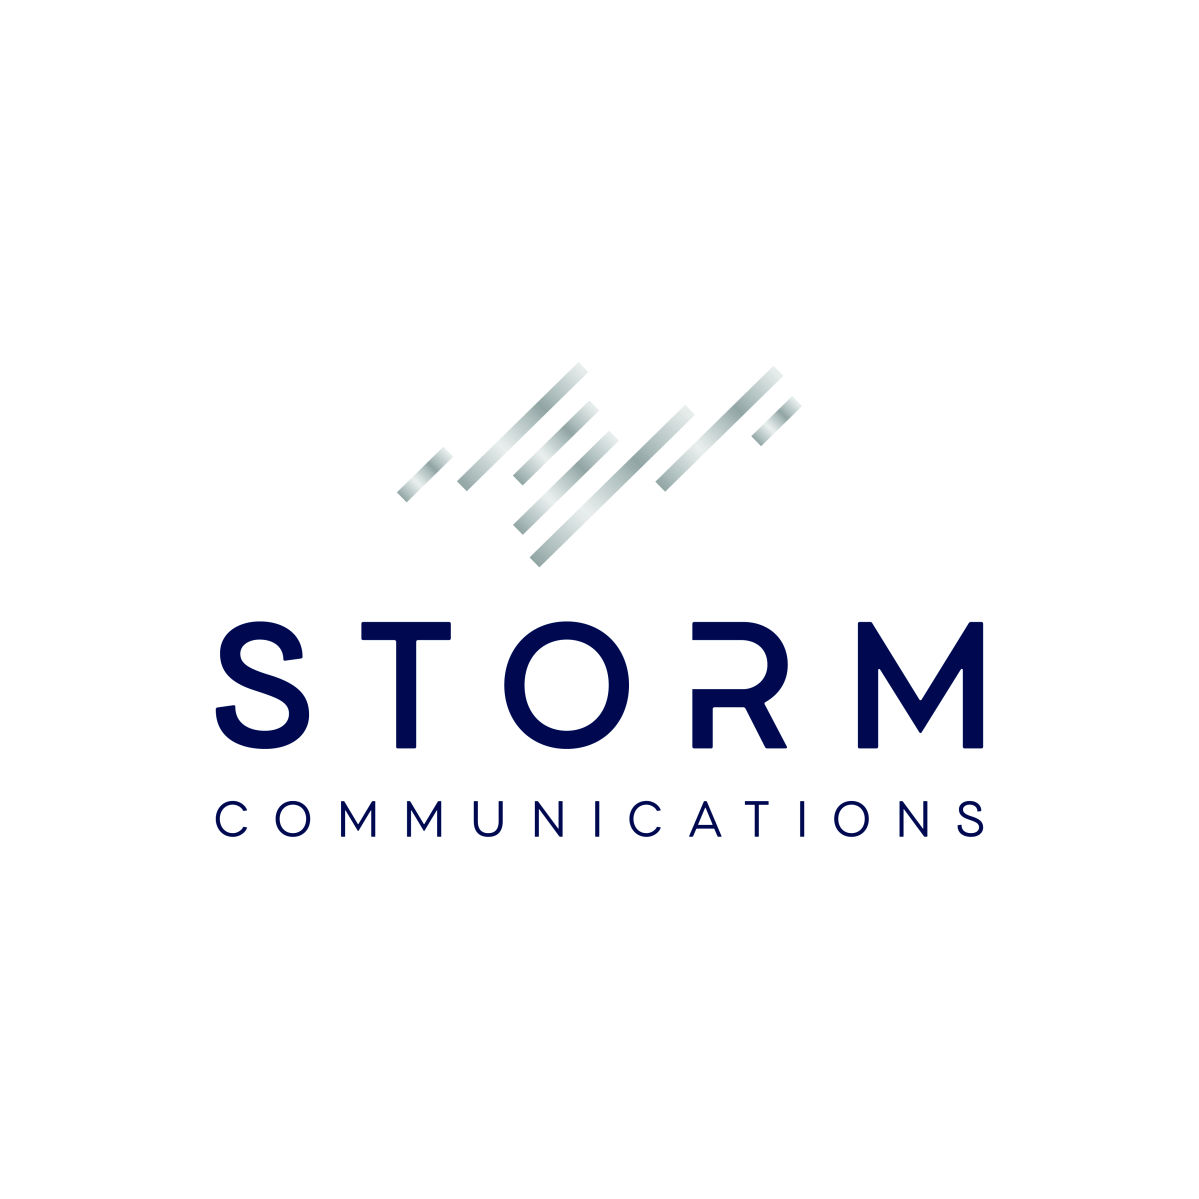 Storm communications